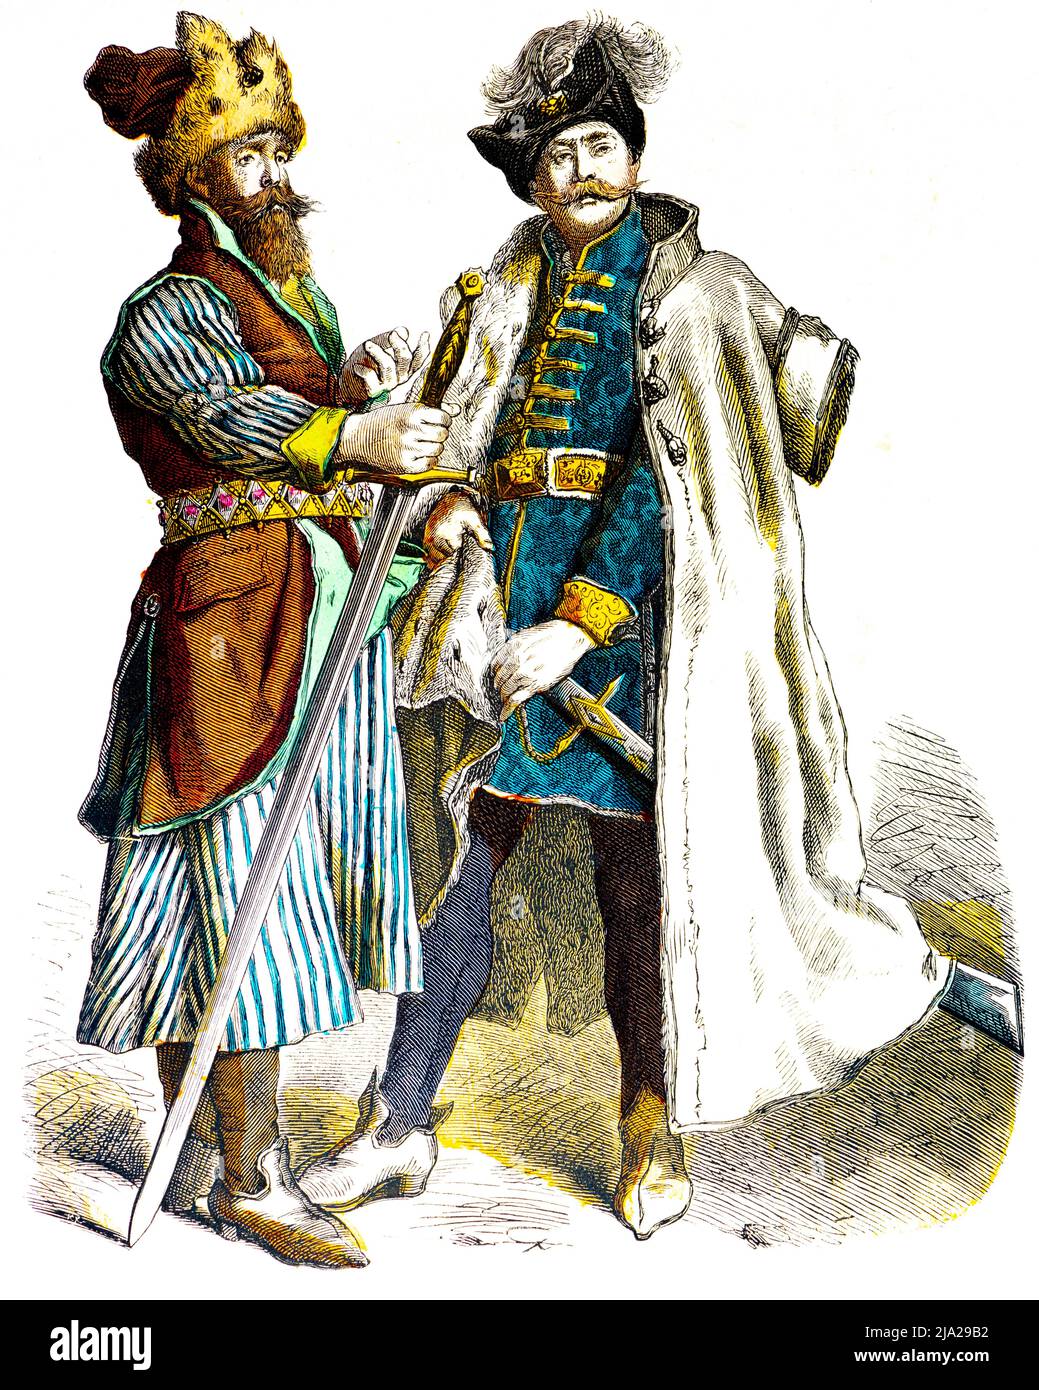 Munich Bilderbogen, fur cap, swords, robe, portrait, coloured historical illustration 1890, Polish costumes, 16th century, distinguished Russian Stock Photo